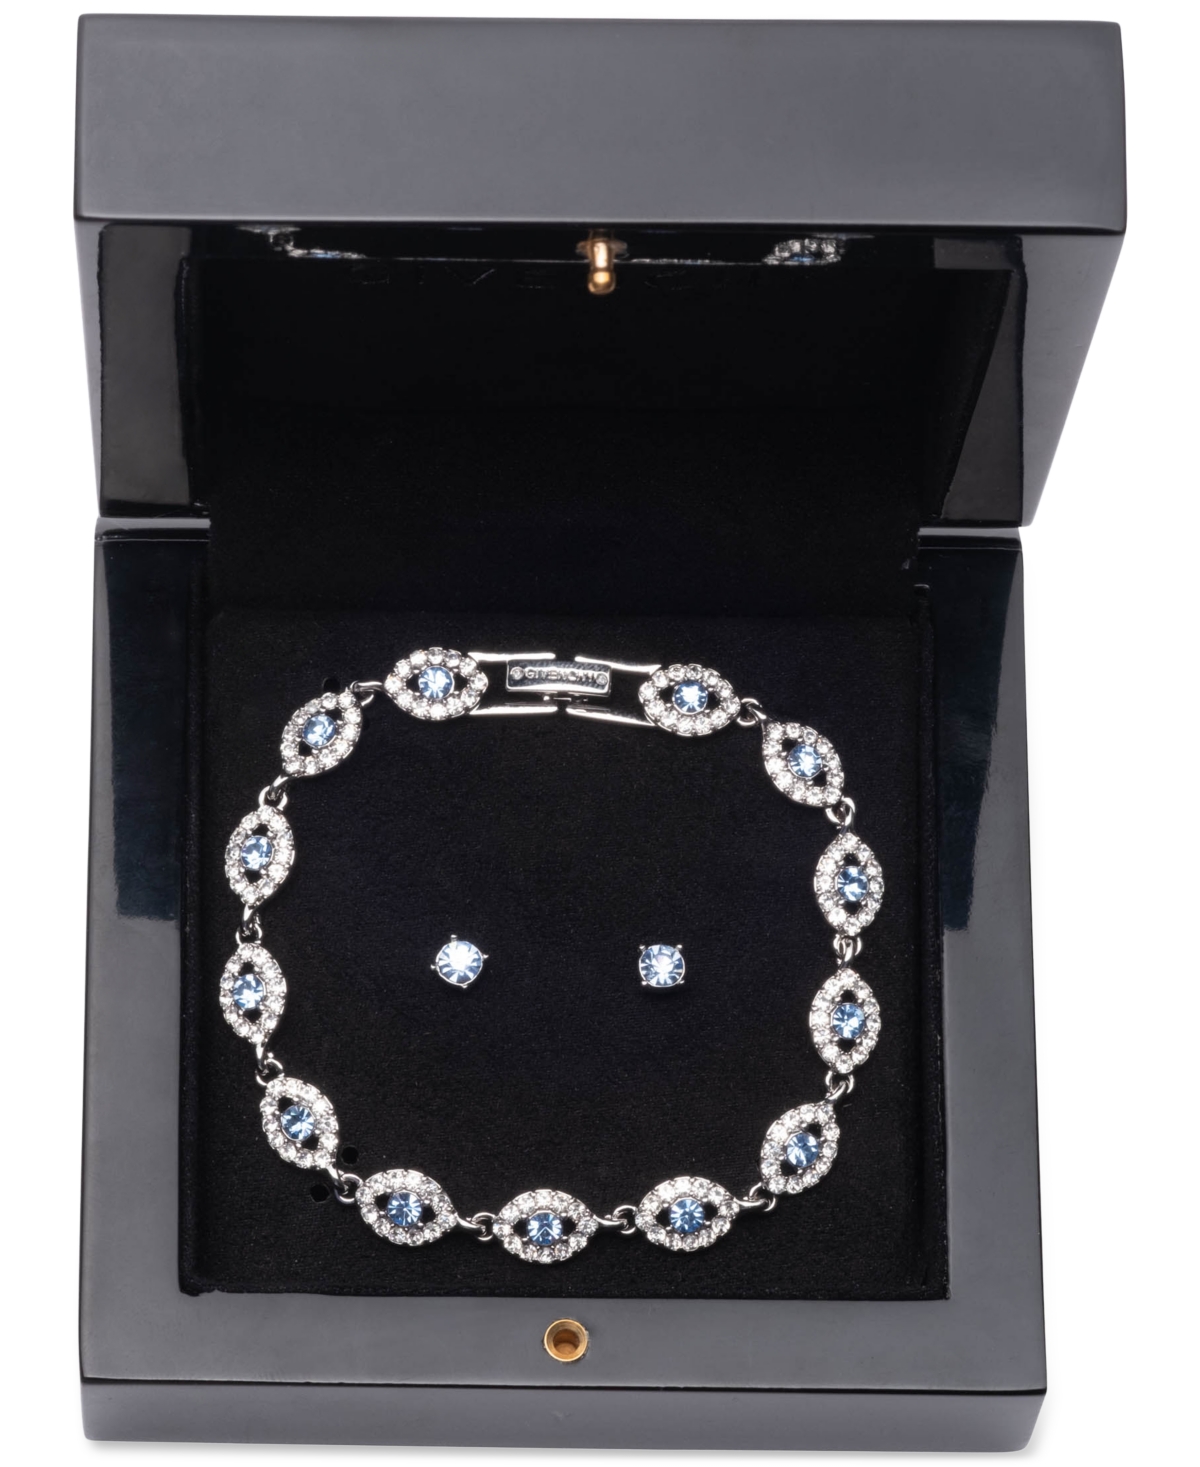 Silver-Tone 2-Pc. Set Stone & Crystal Link Bracelet & Crystal Stud Earrings - Turq/aqua